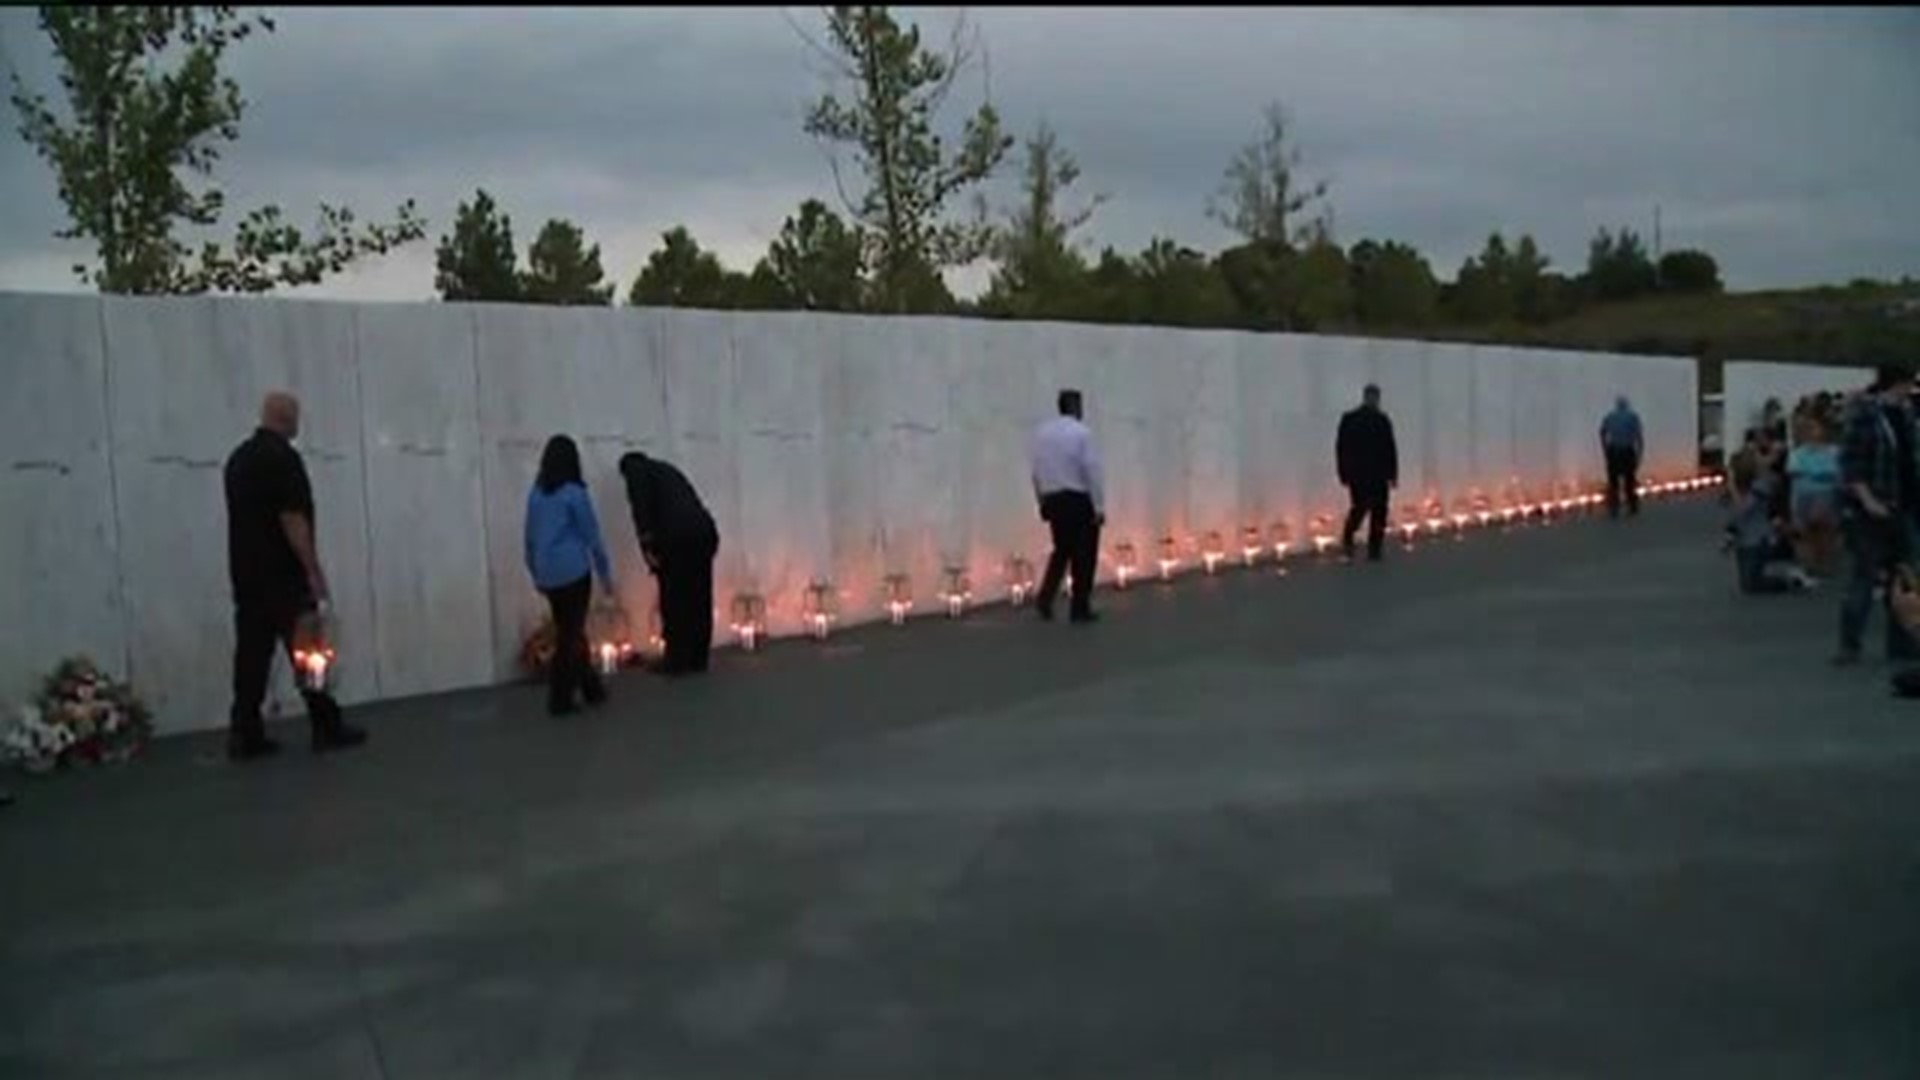 Memorial Service Held in Shanksville on Eve of 9/11 Anniversary